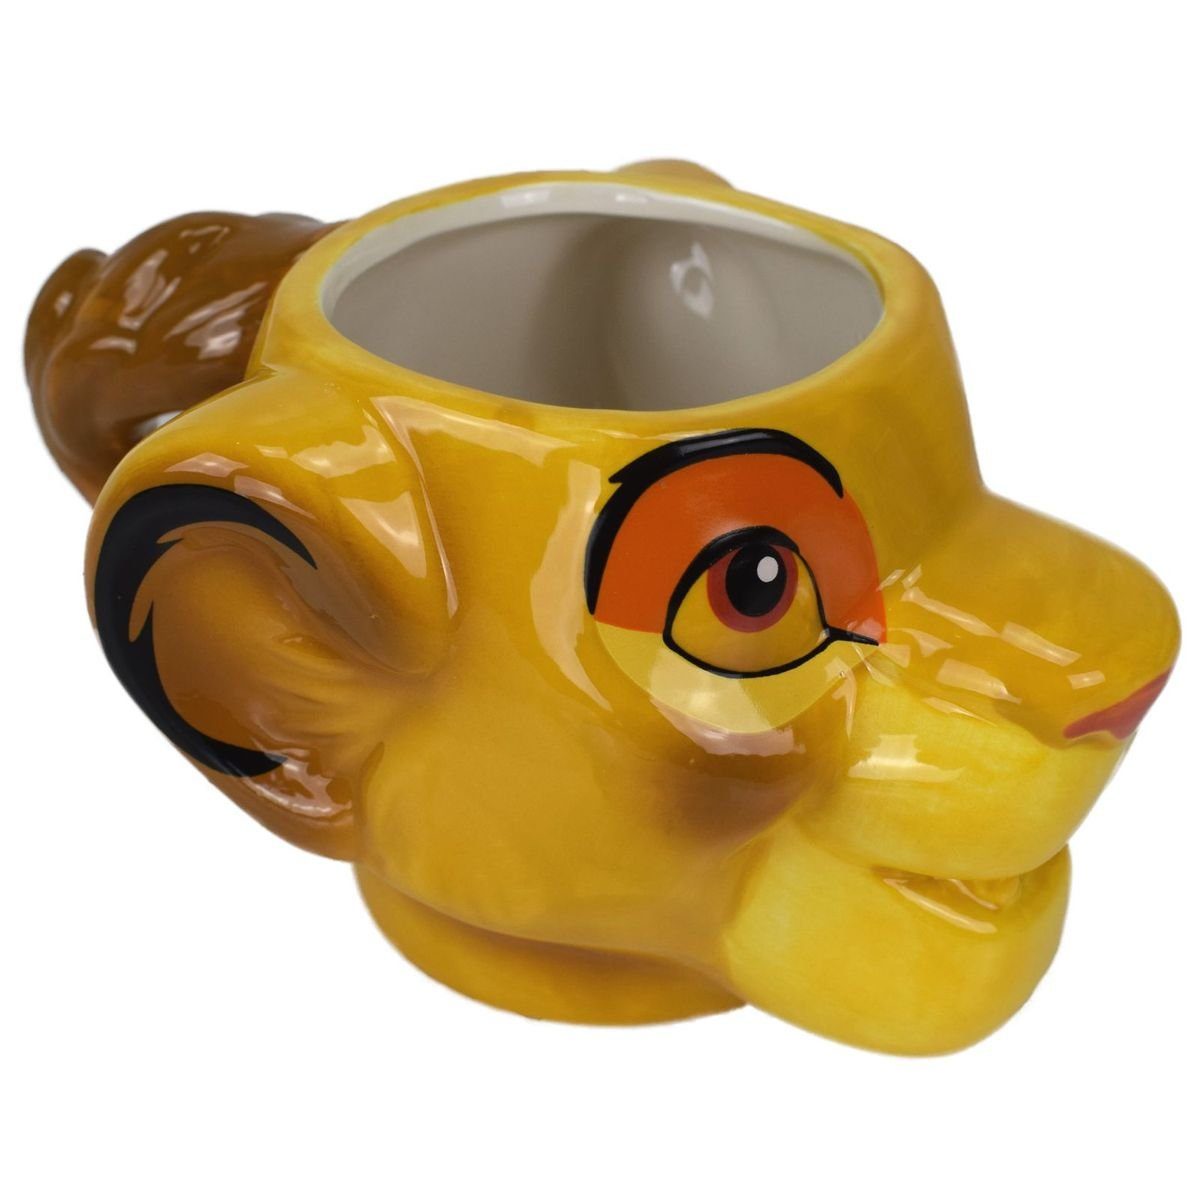 Stor Tasse Motivtasse Keramiktasse Kopf Simba 3D Disneys König der Löwen Becher, Keramik, 3D